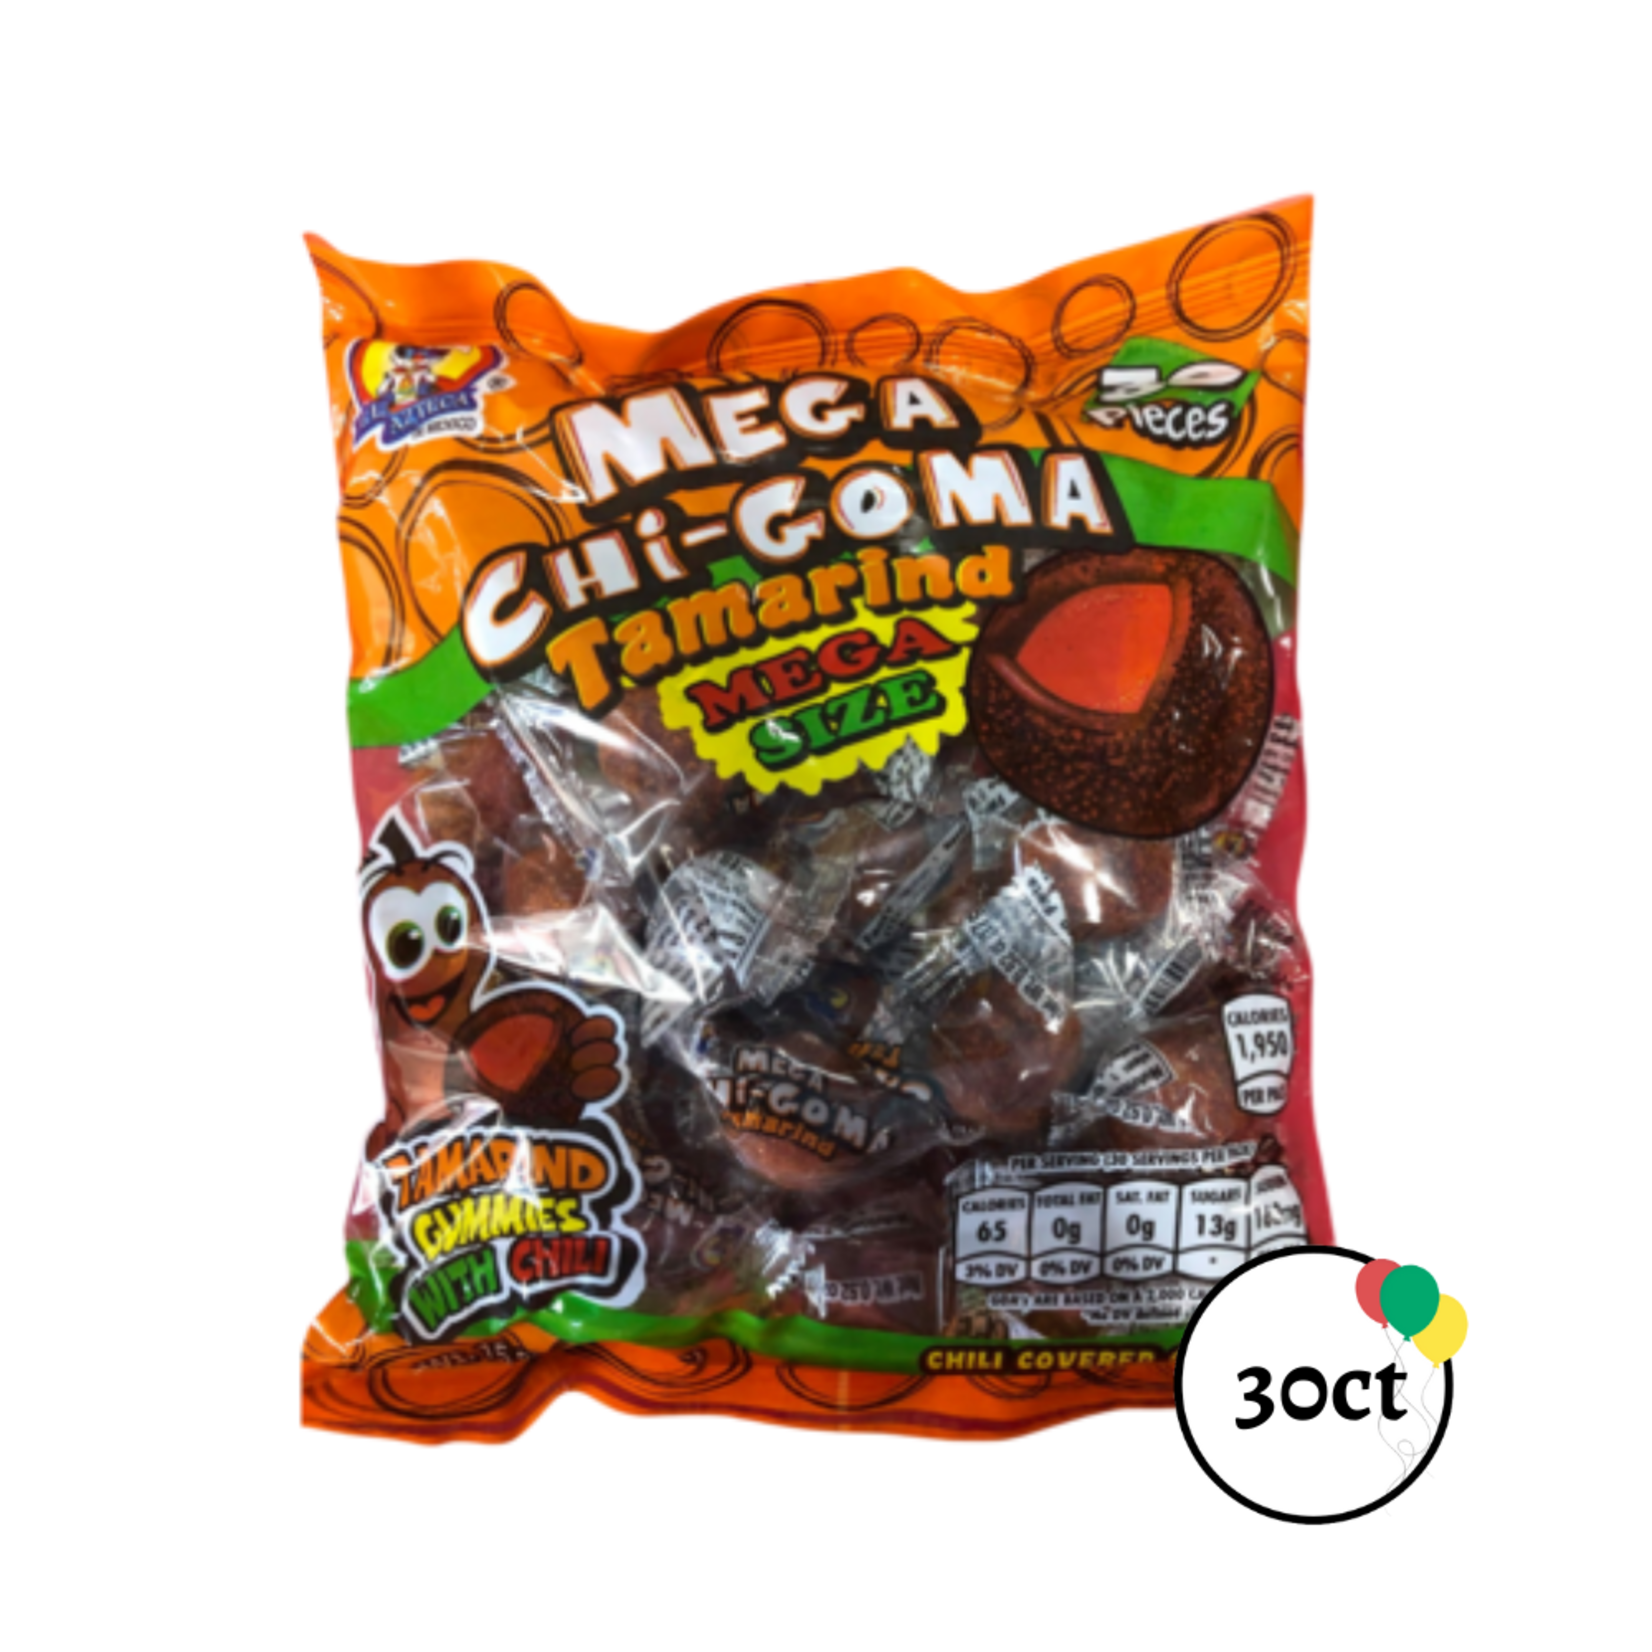 El Azteca Azteca Chi-Goma Tamarind Bag 30ct